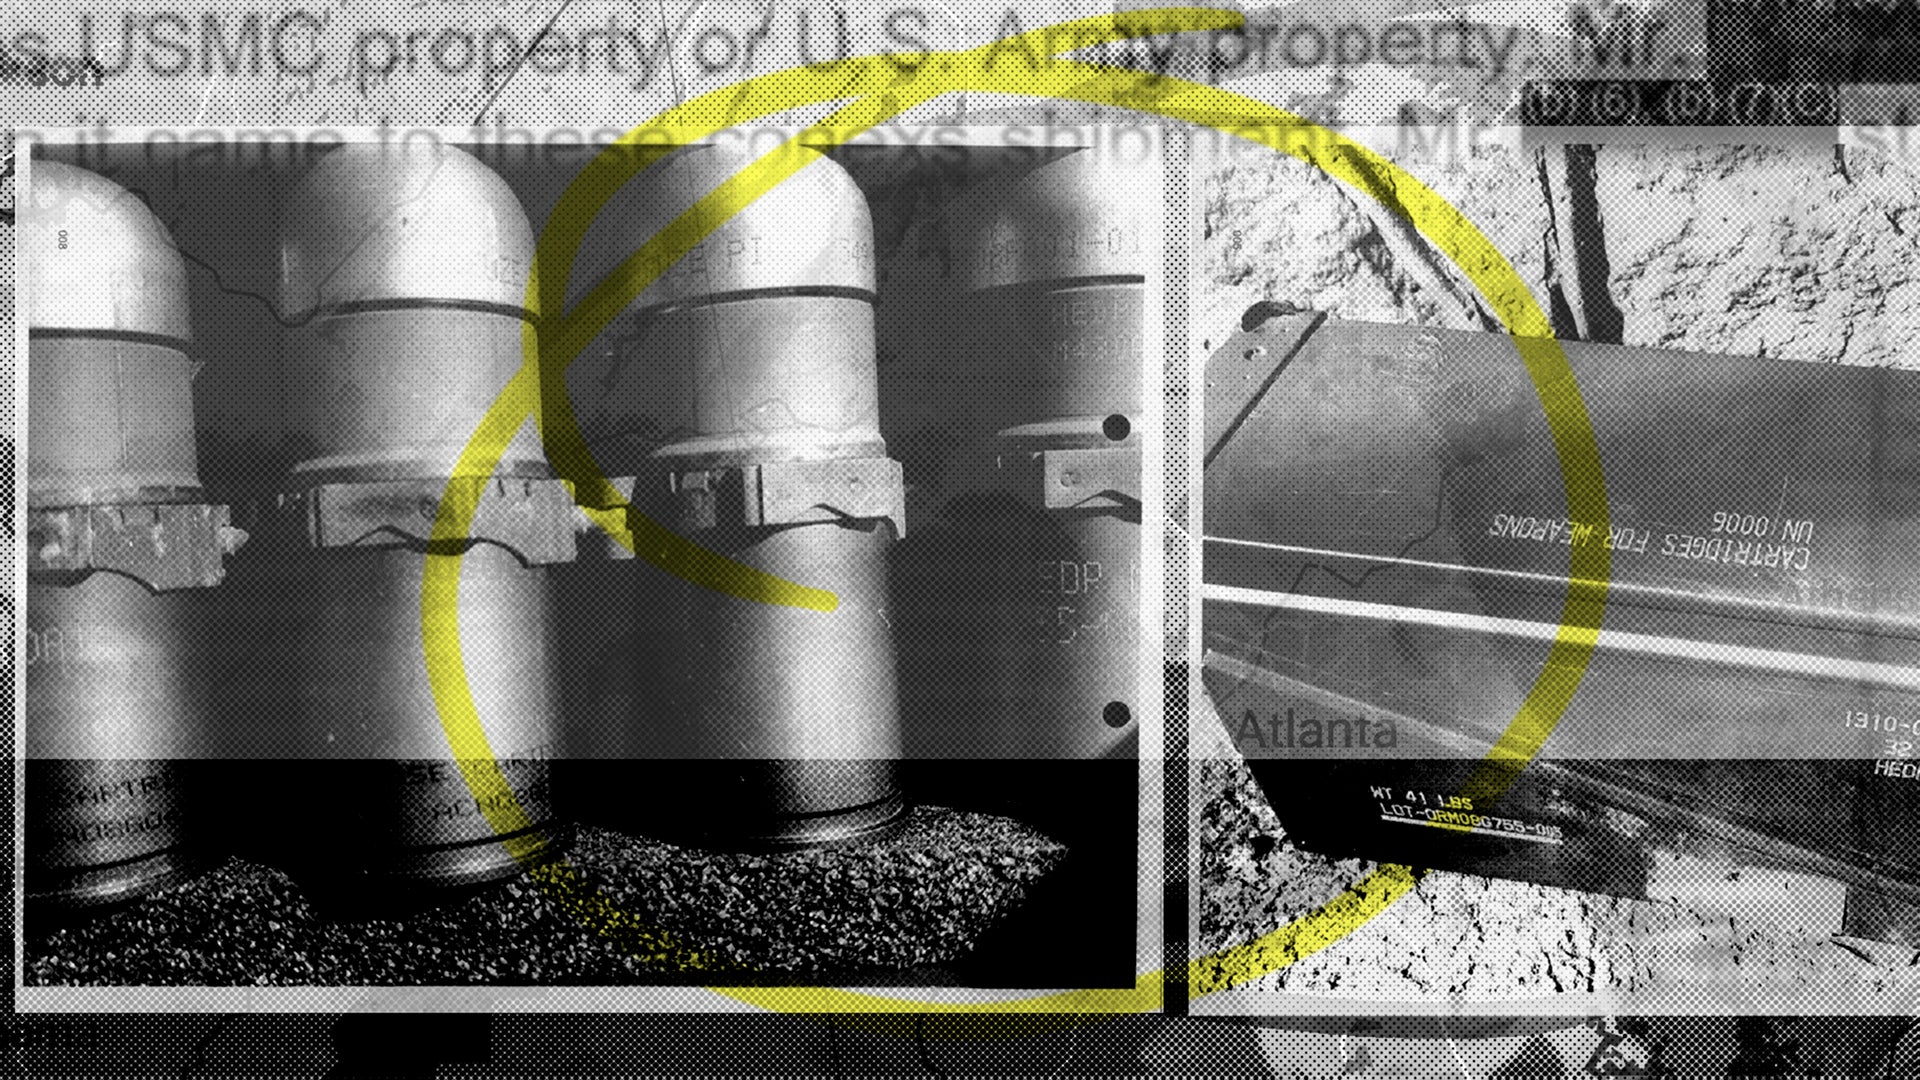 US--AWOL Weapons-Backyard Grenades